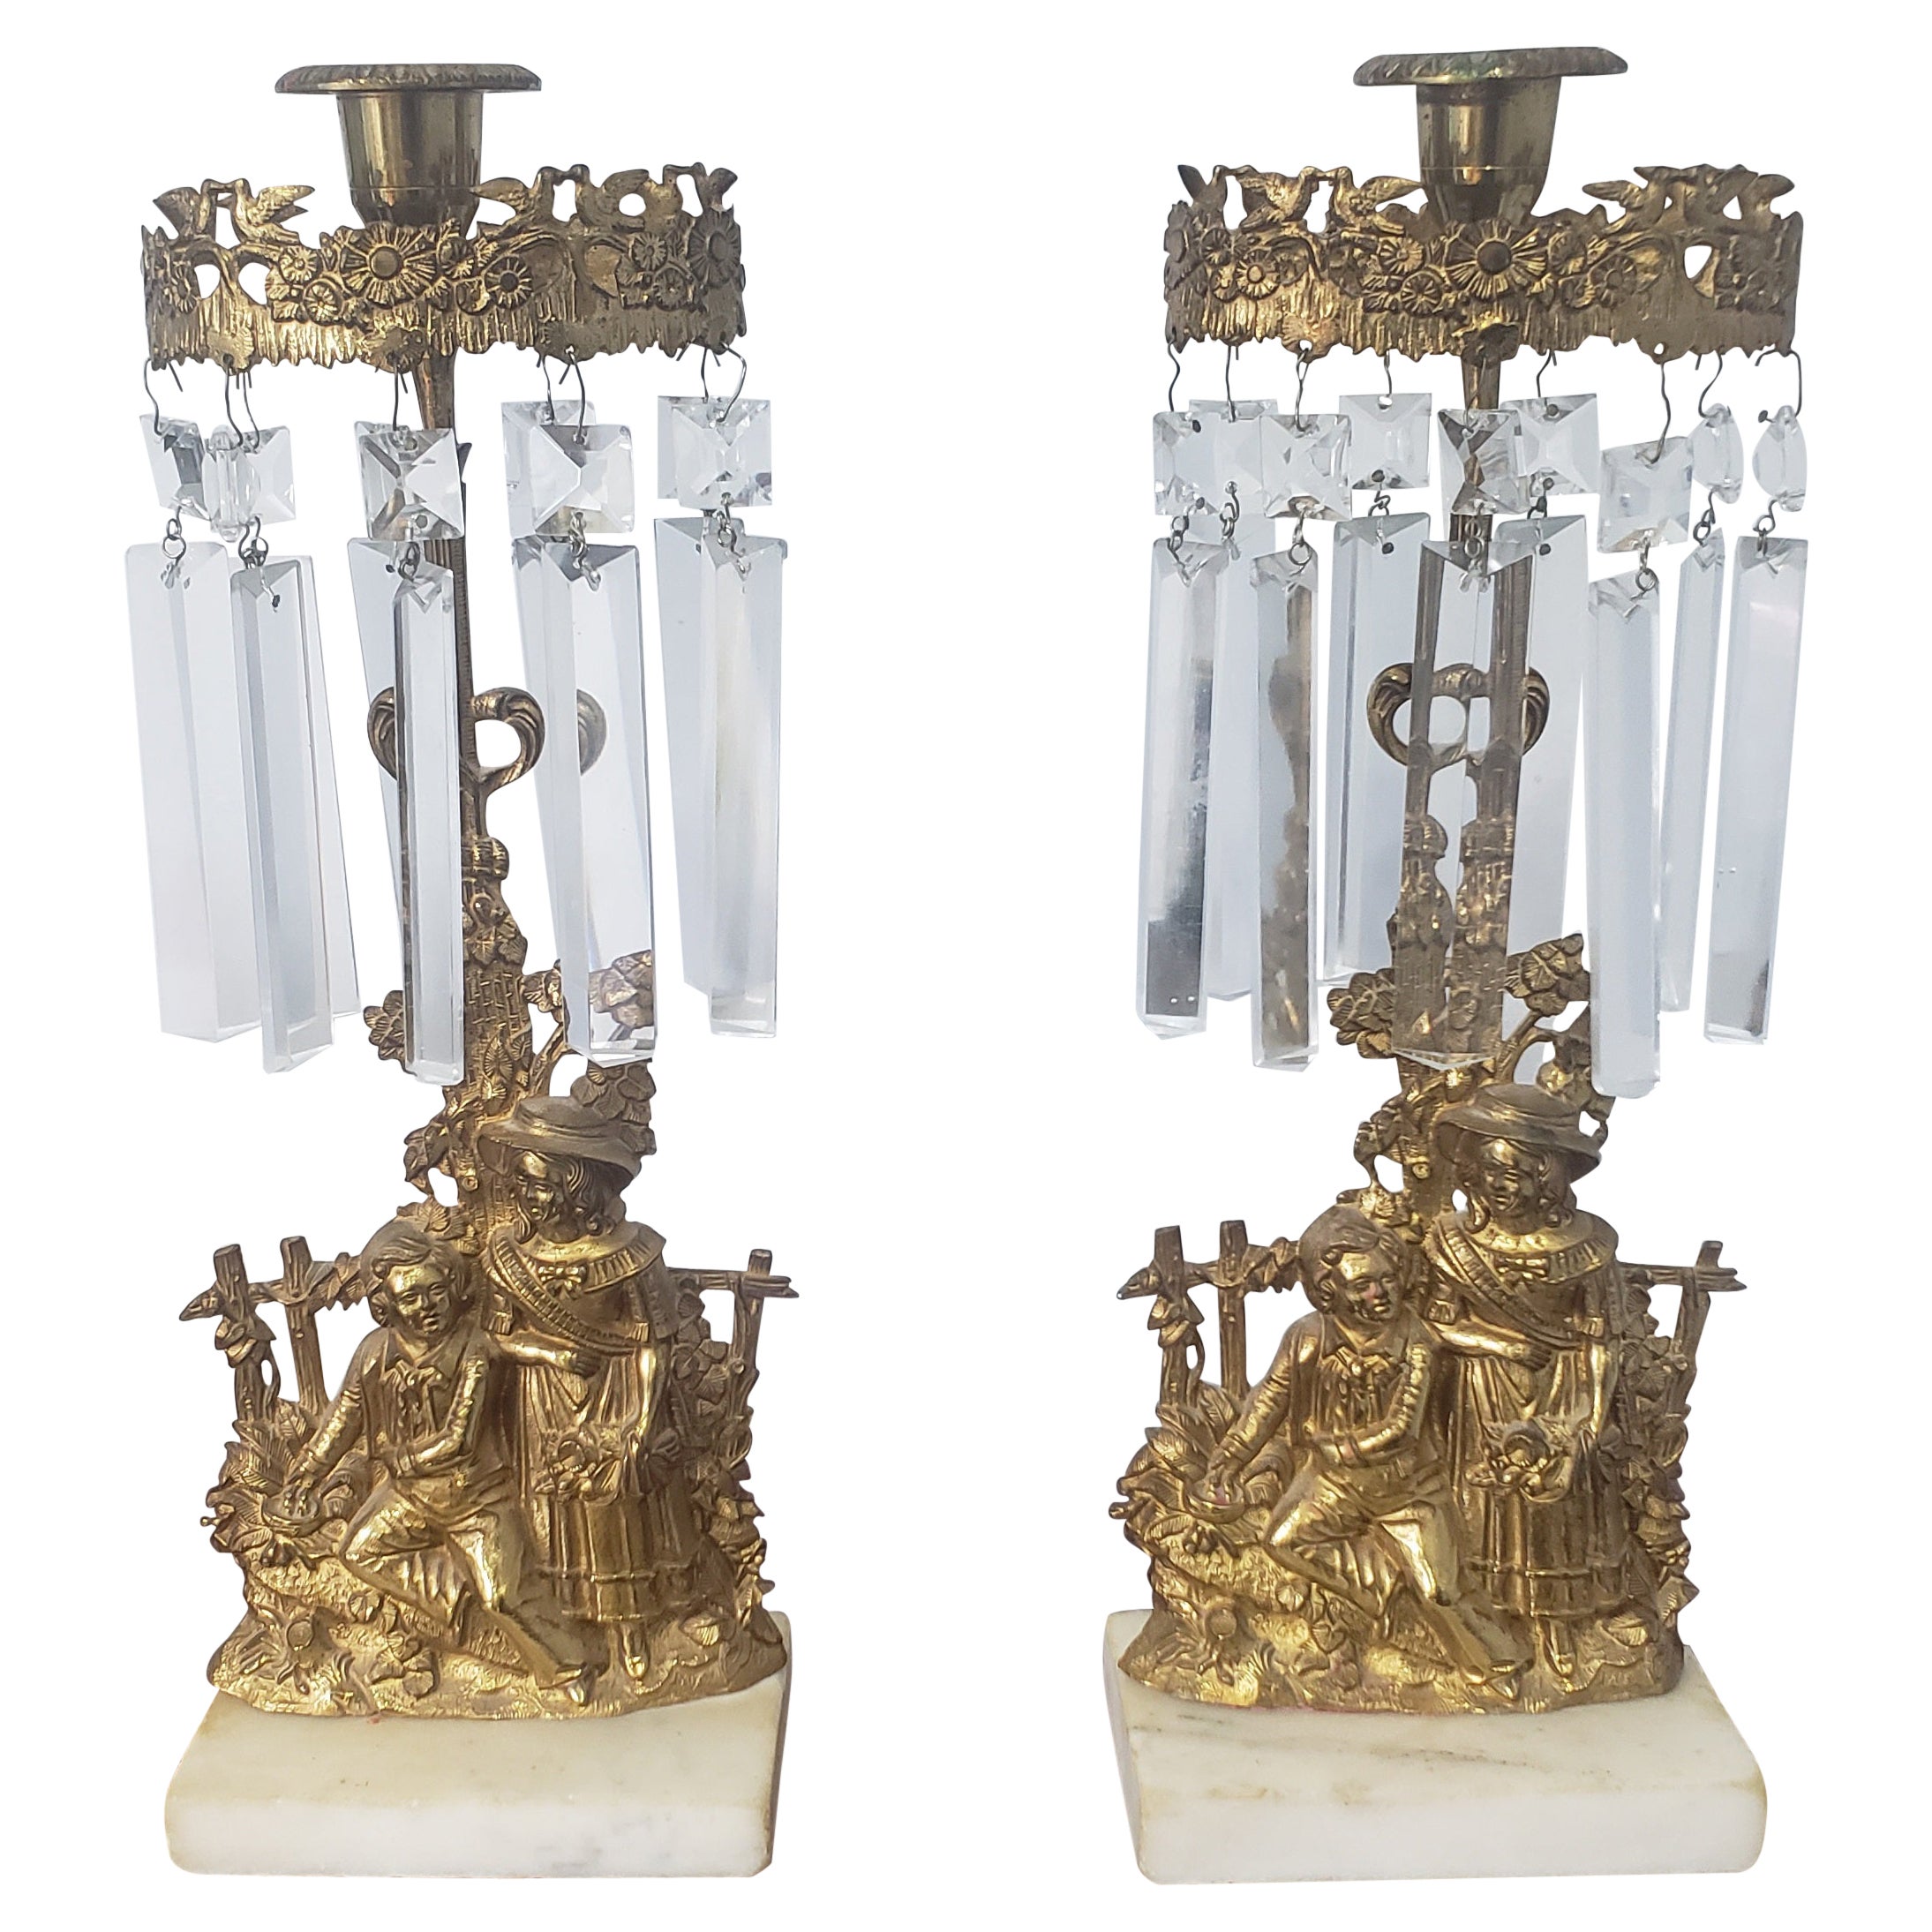 circa 1840s Cornelius and Co. Cast Brass & Marble Girandole Candlesticks, a Pair For Sale